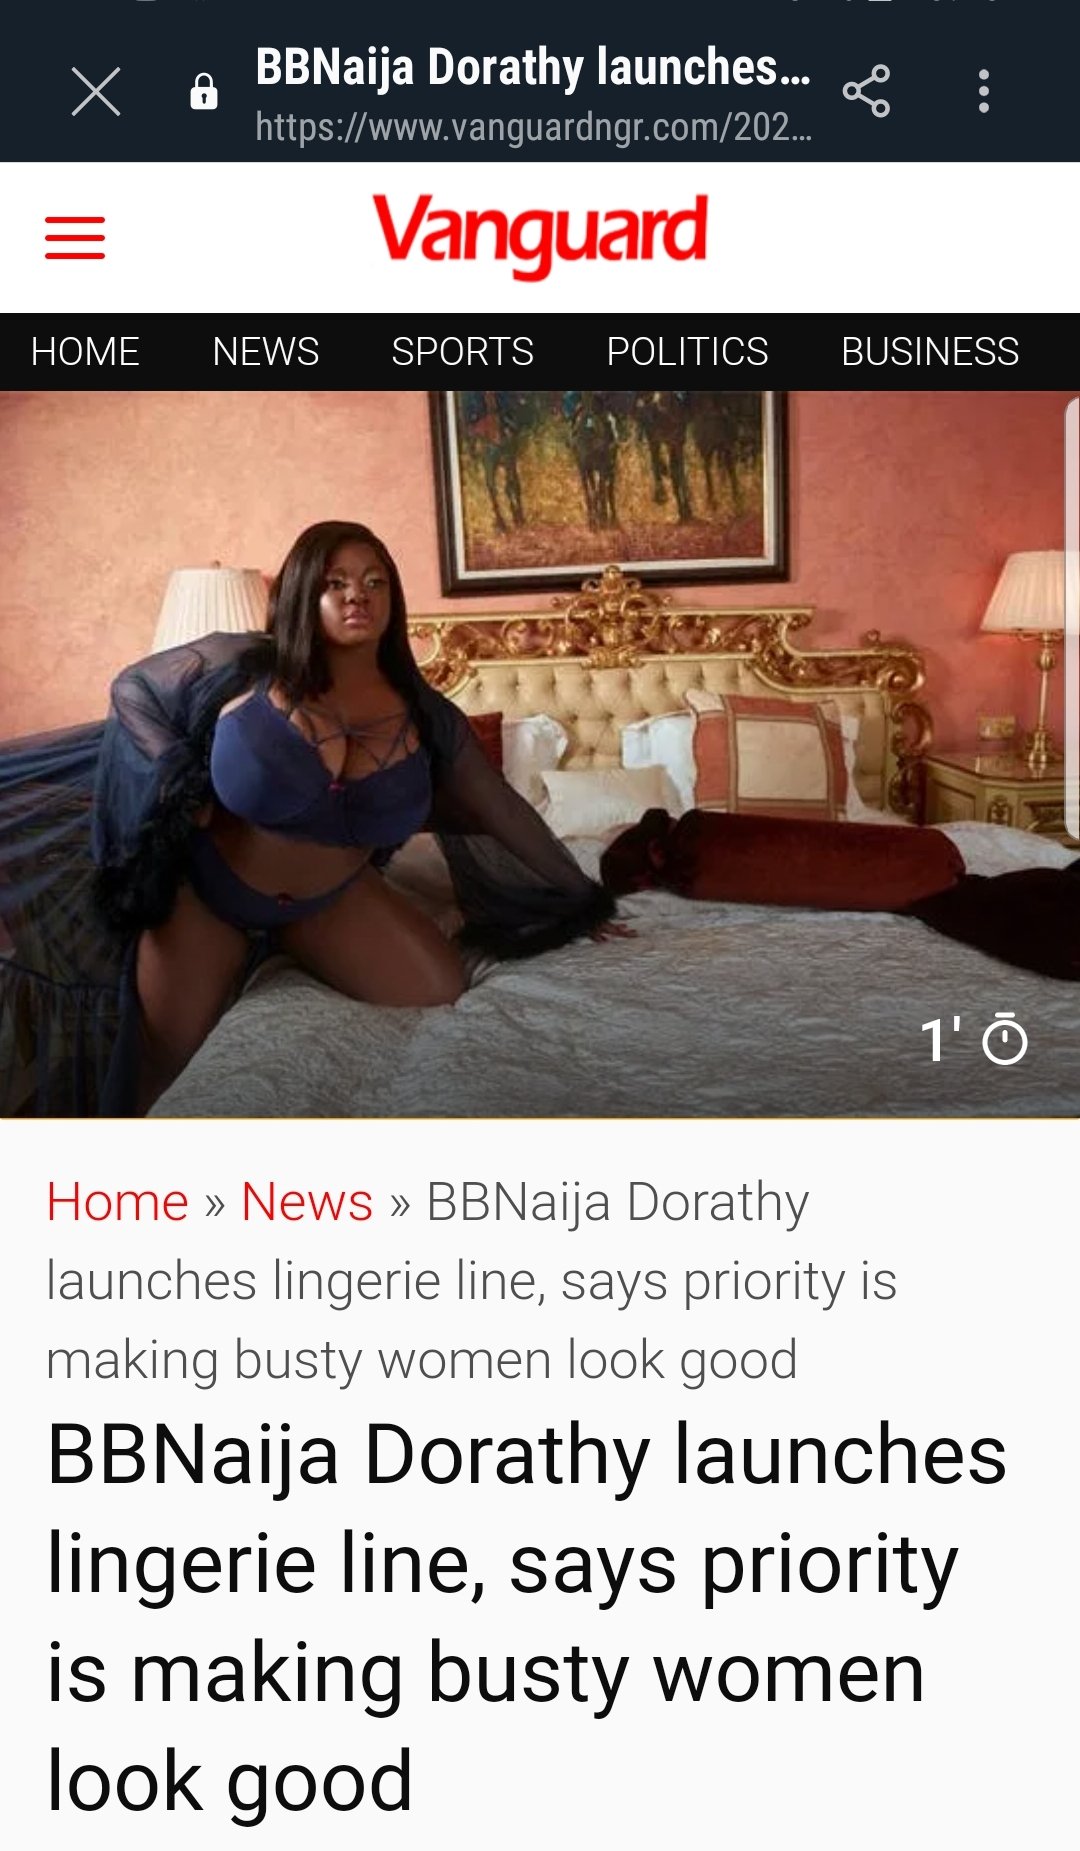 BBNaija Dorathy launches lingerie line, says priority is making